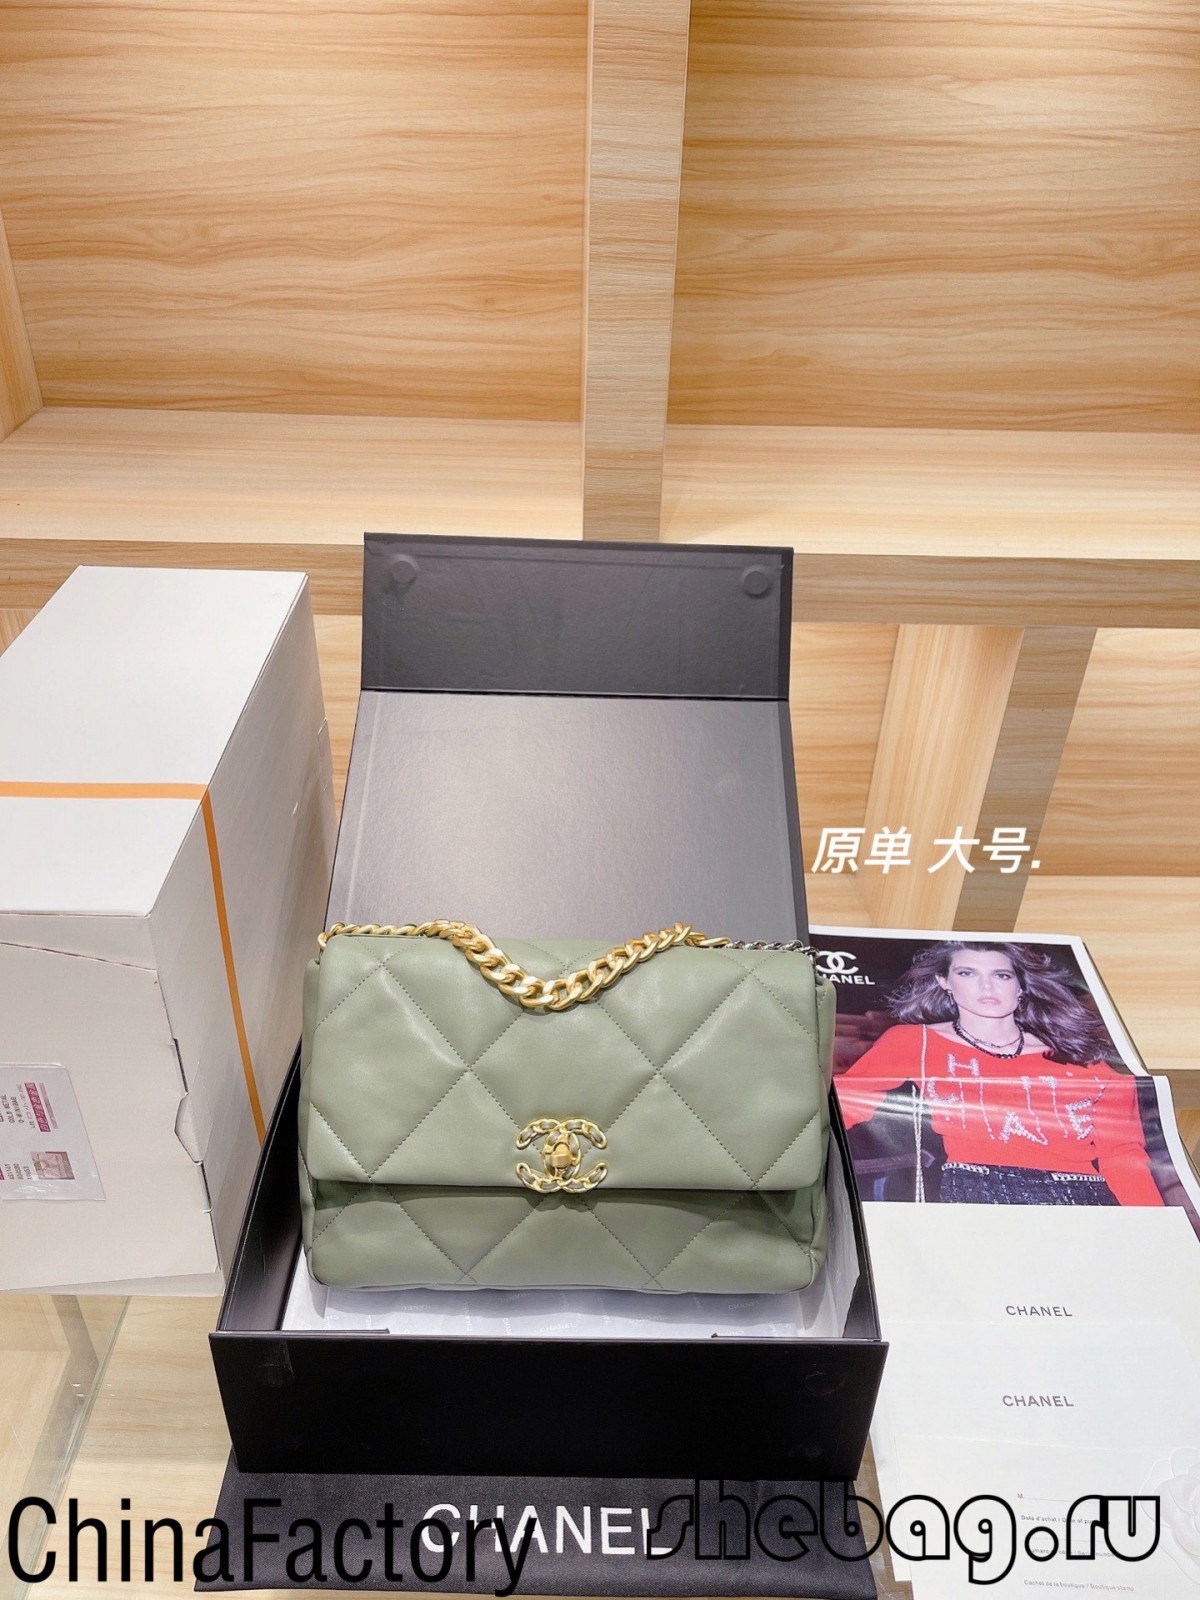 Aaa Chanel bag replica: Chanel 19 replica bag review (Mizajou nan 2022)-Best Quality Fo Louis Vuitton Bag Online Store, Replica designer bag ru